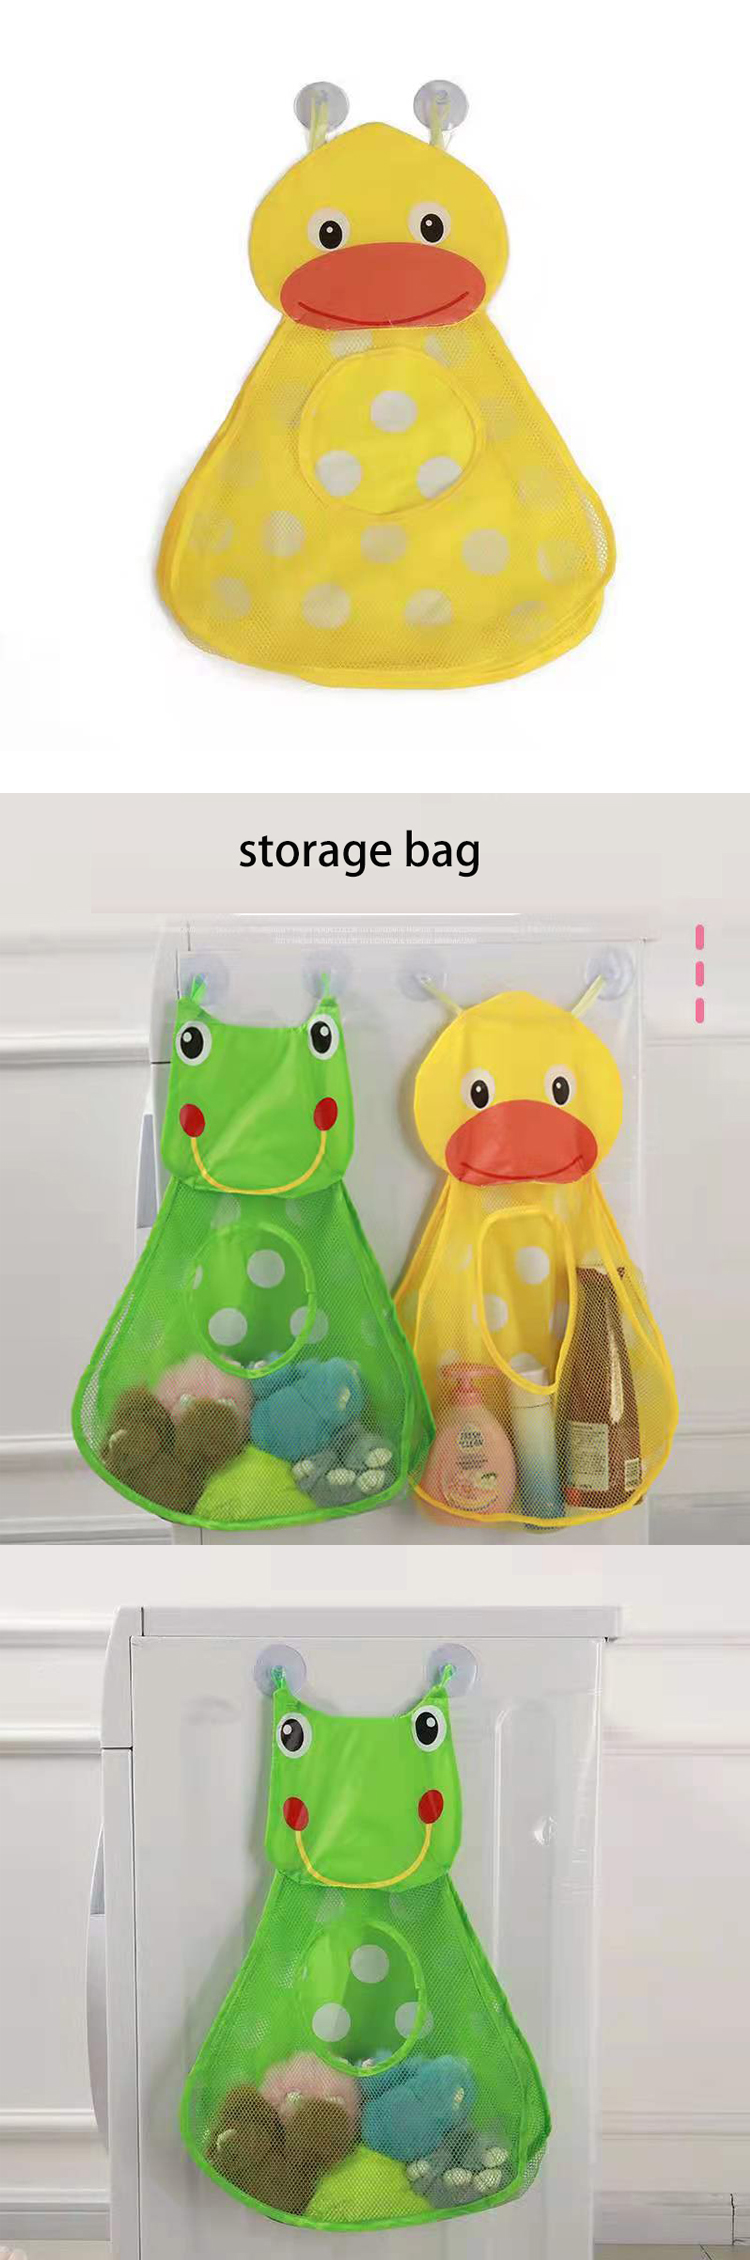 Household storage sanitary ware